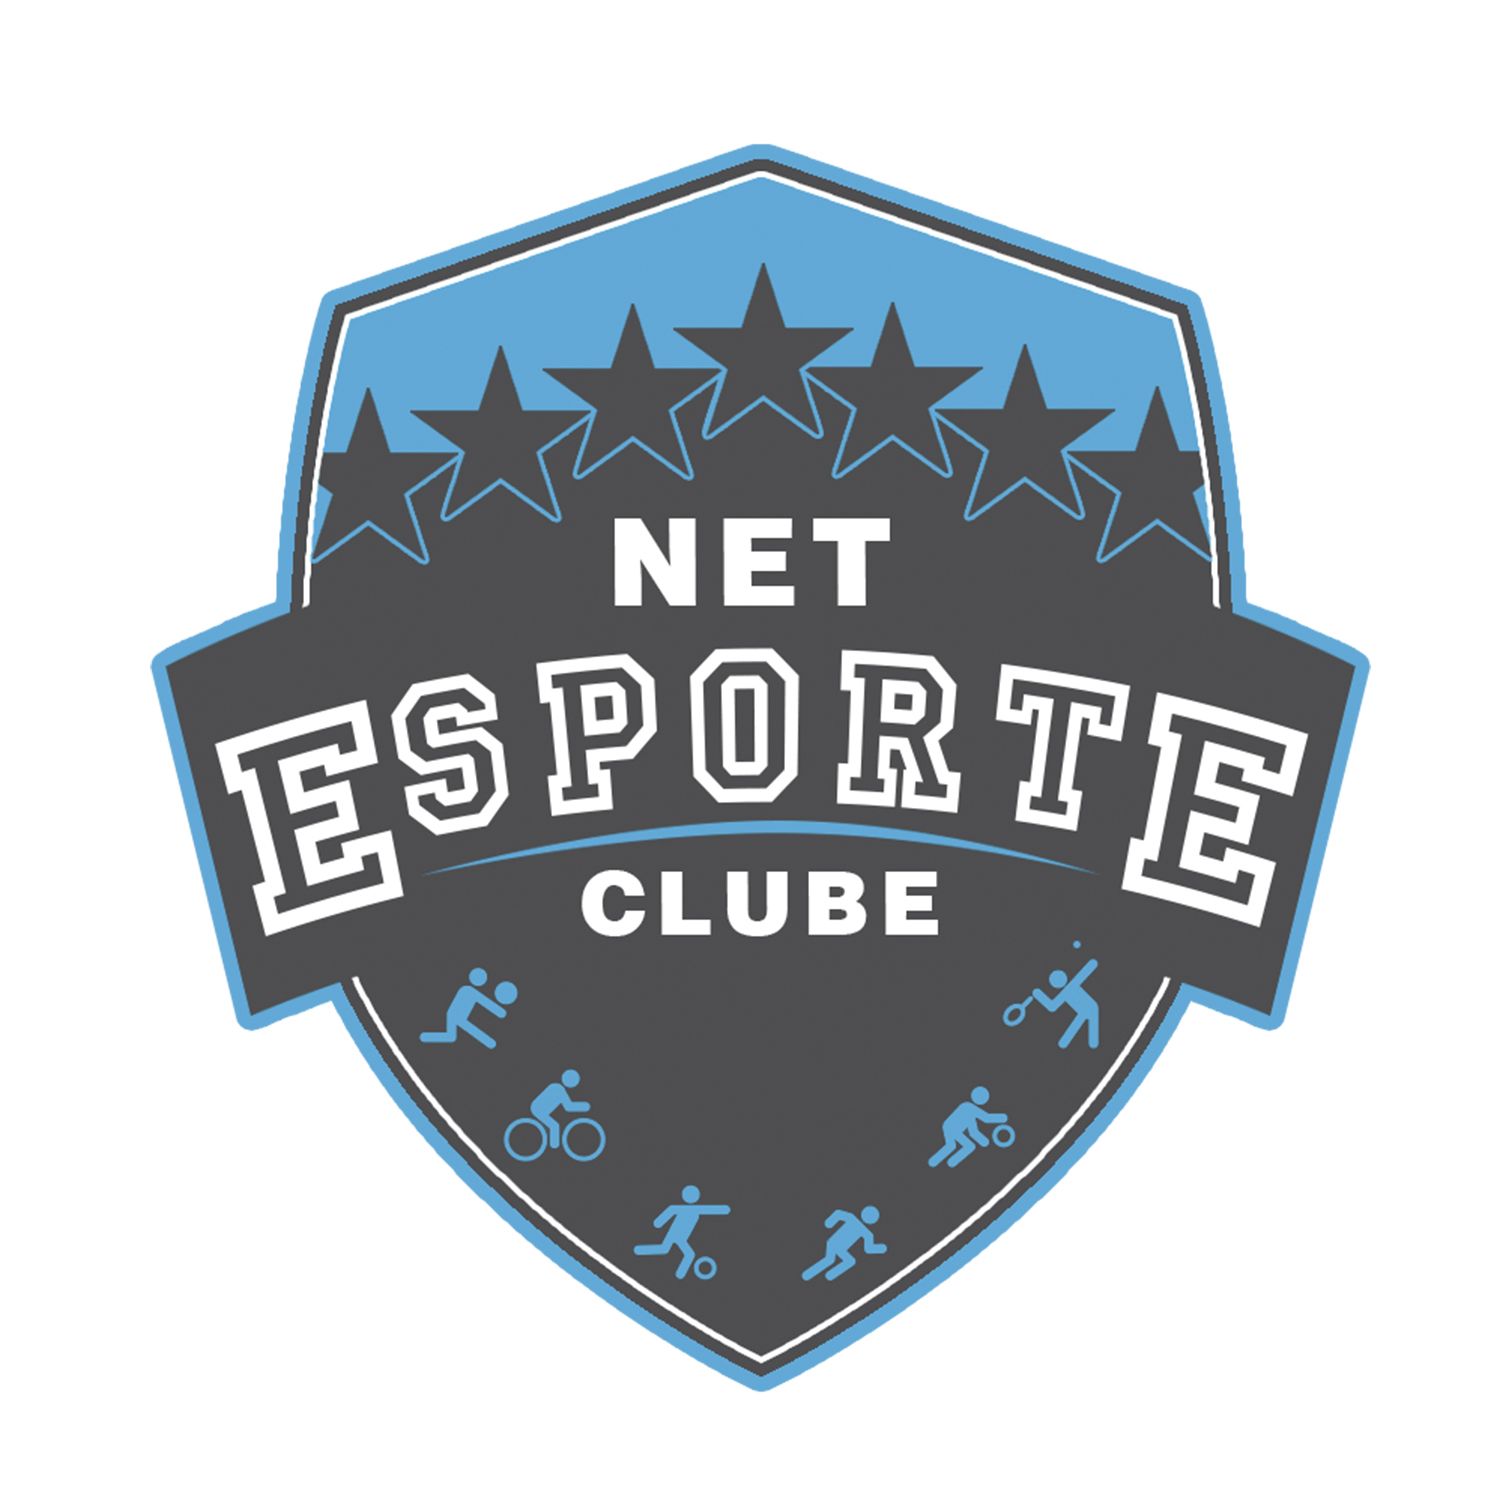 Net Esporte Clube